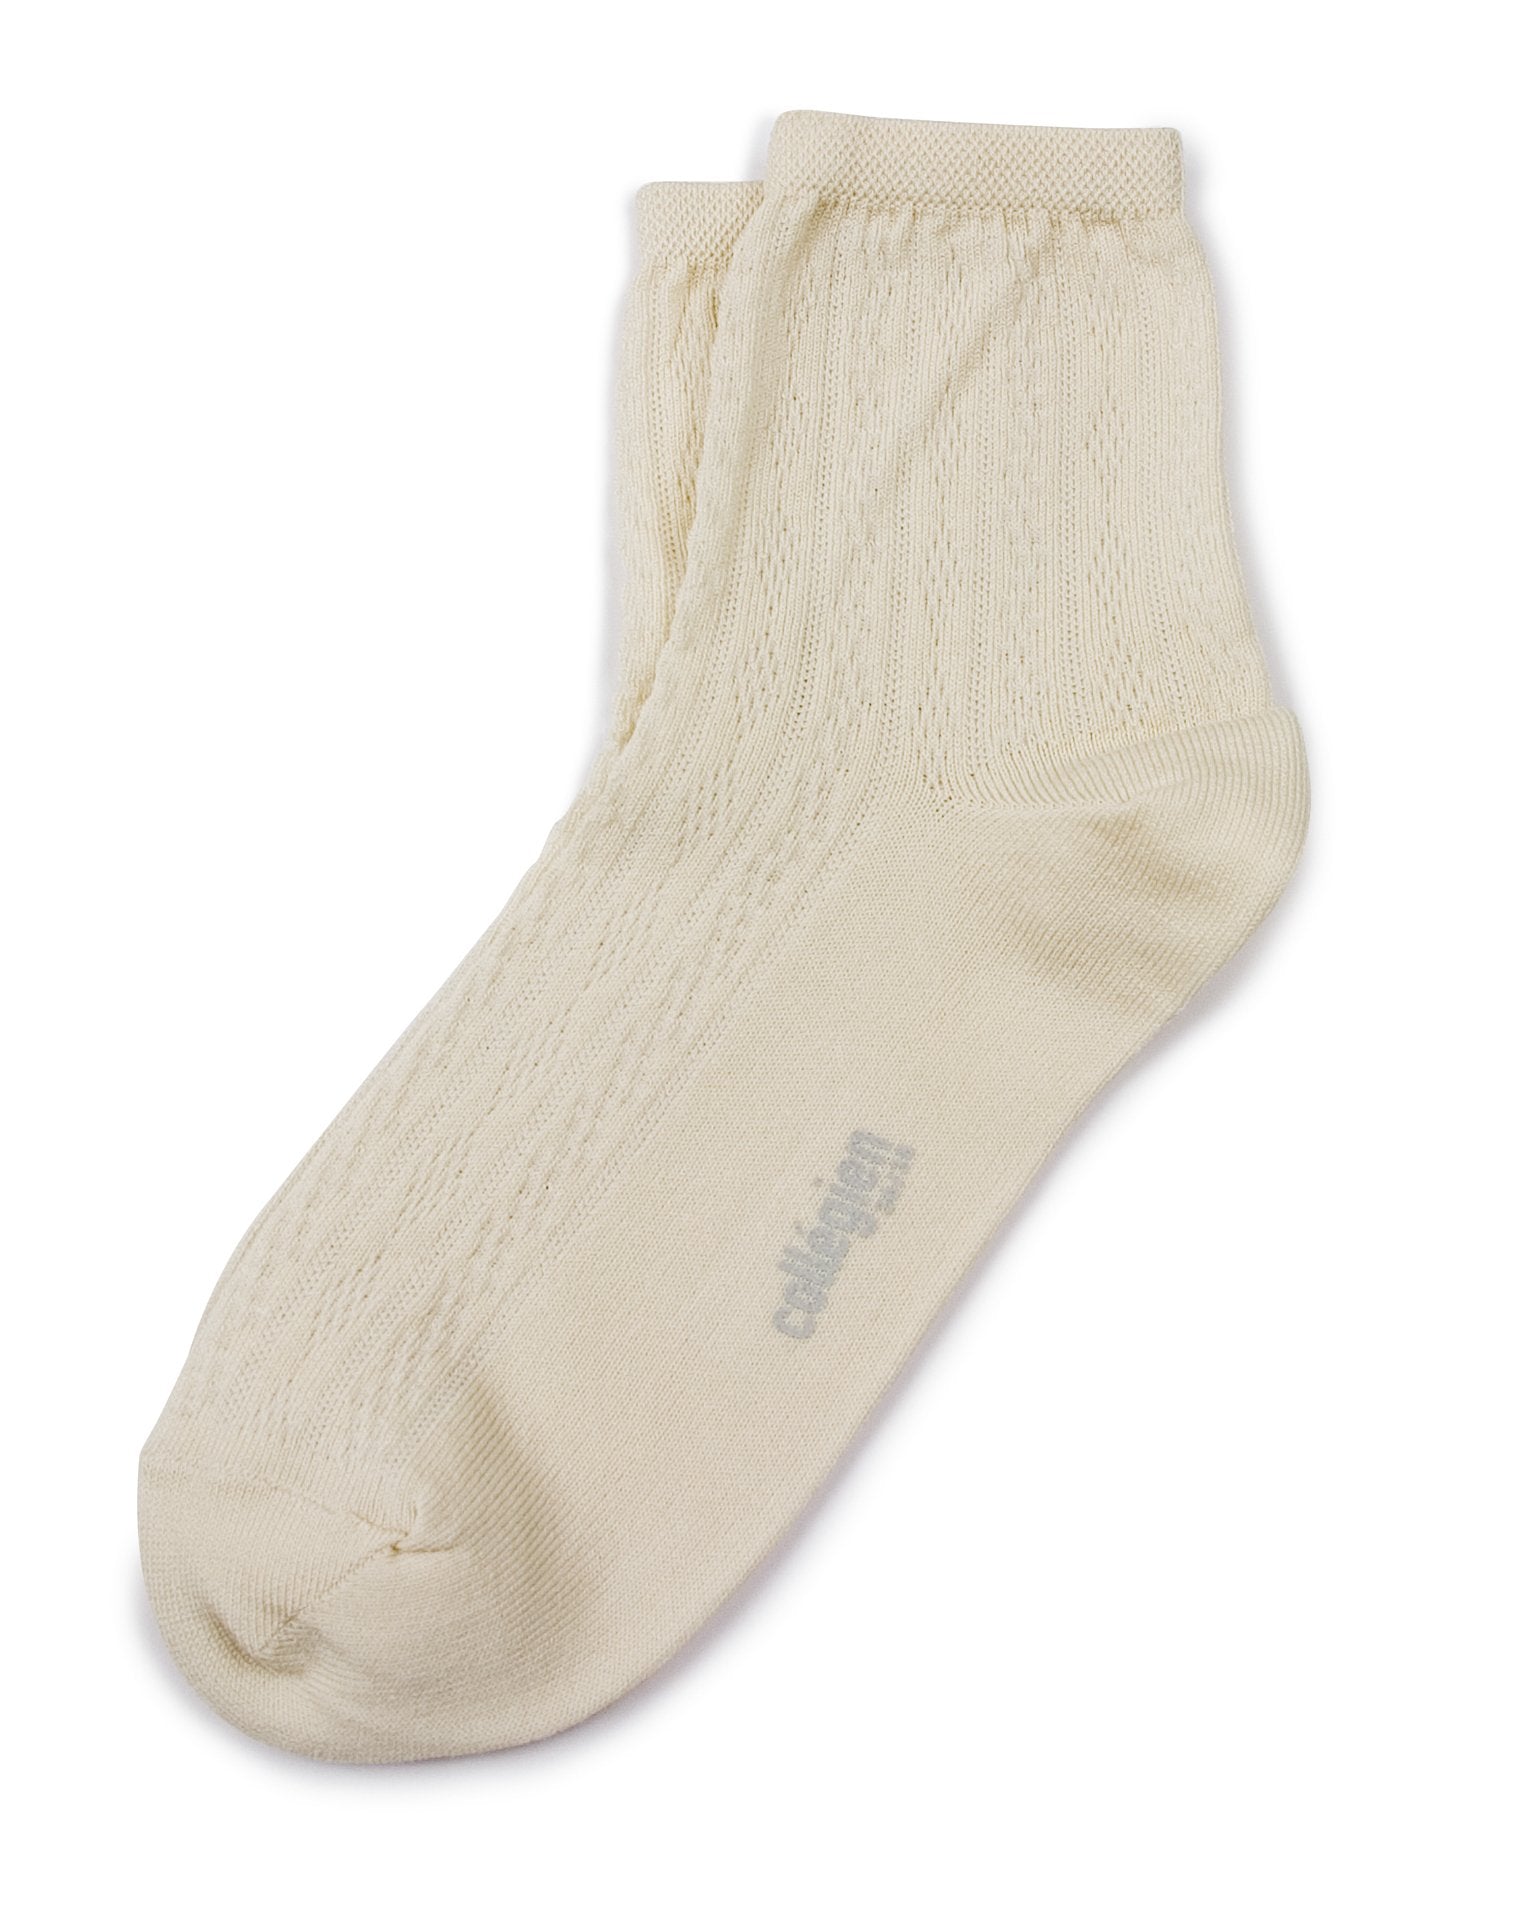 Little collegien accessories pointelle ankle socks in doux agneaux